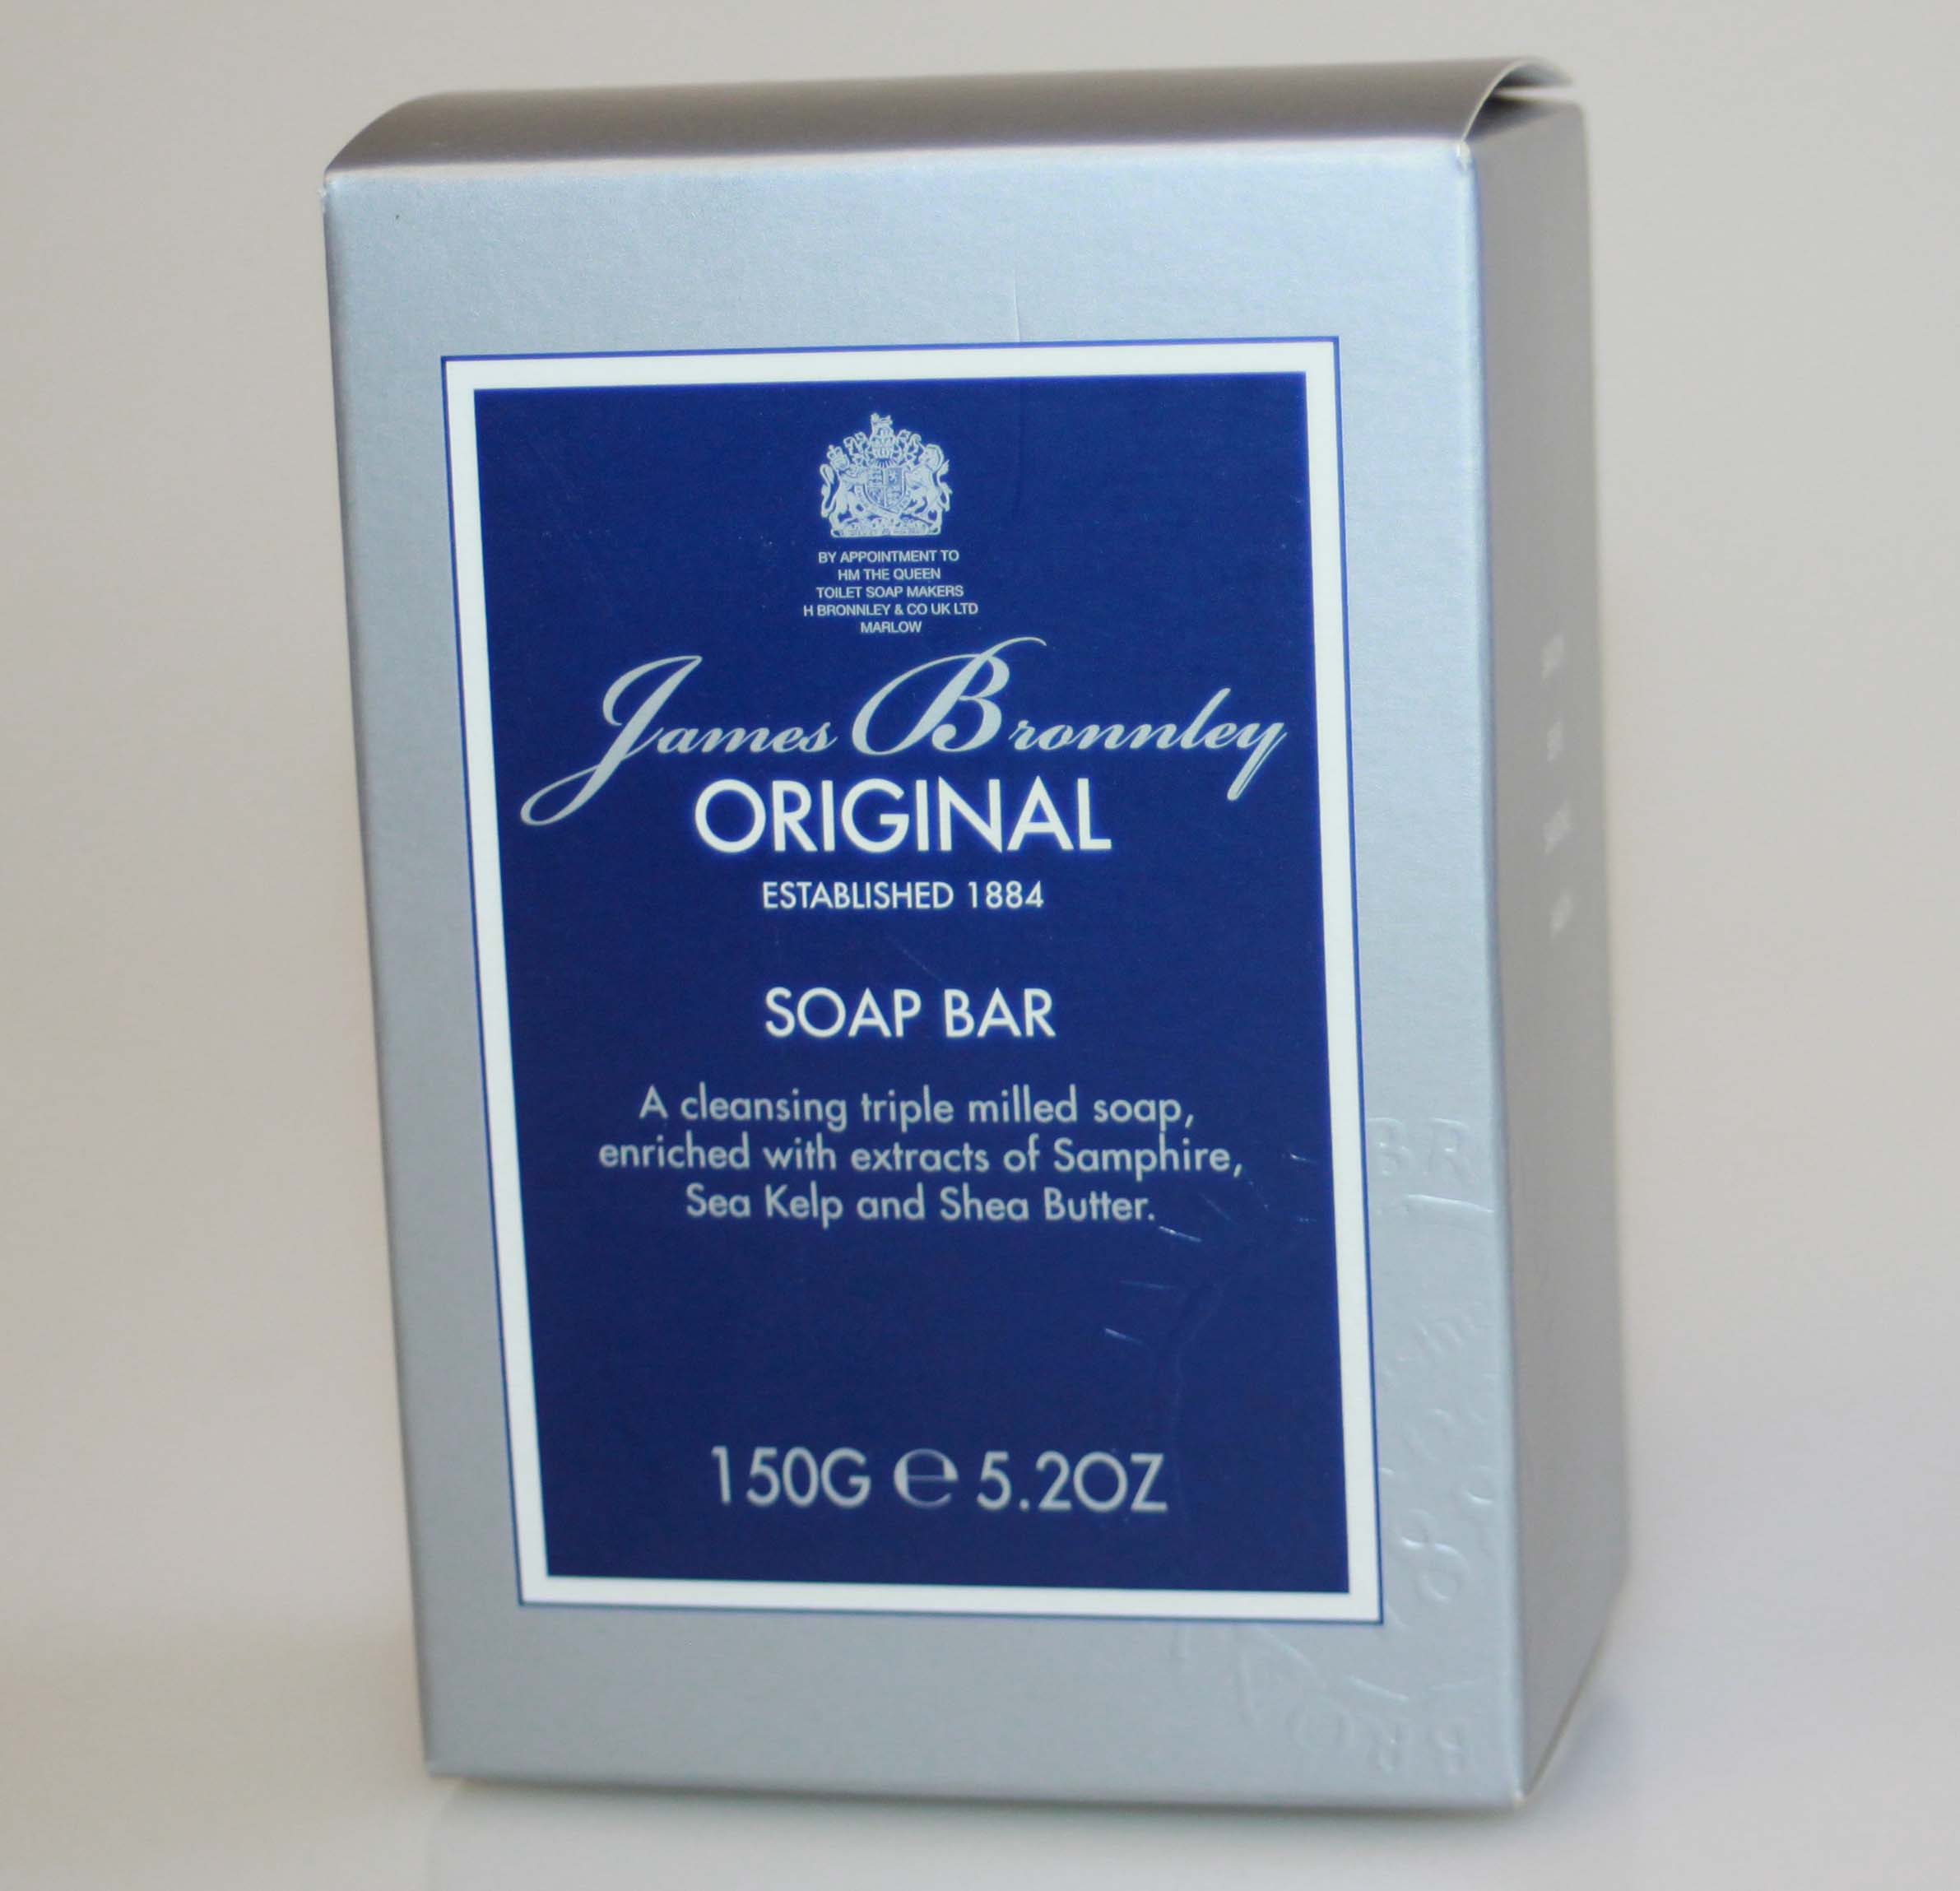 James Bronnley Original Soap Bar 150g